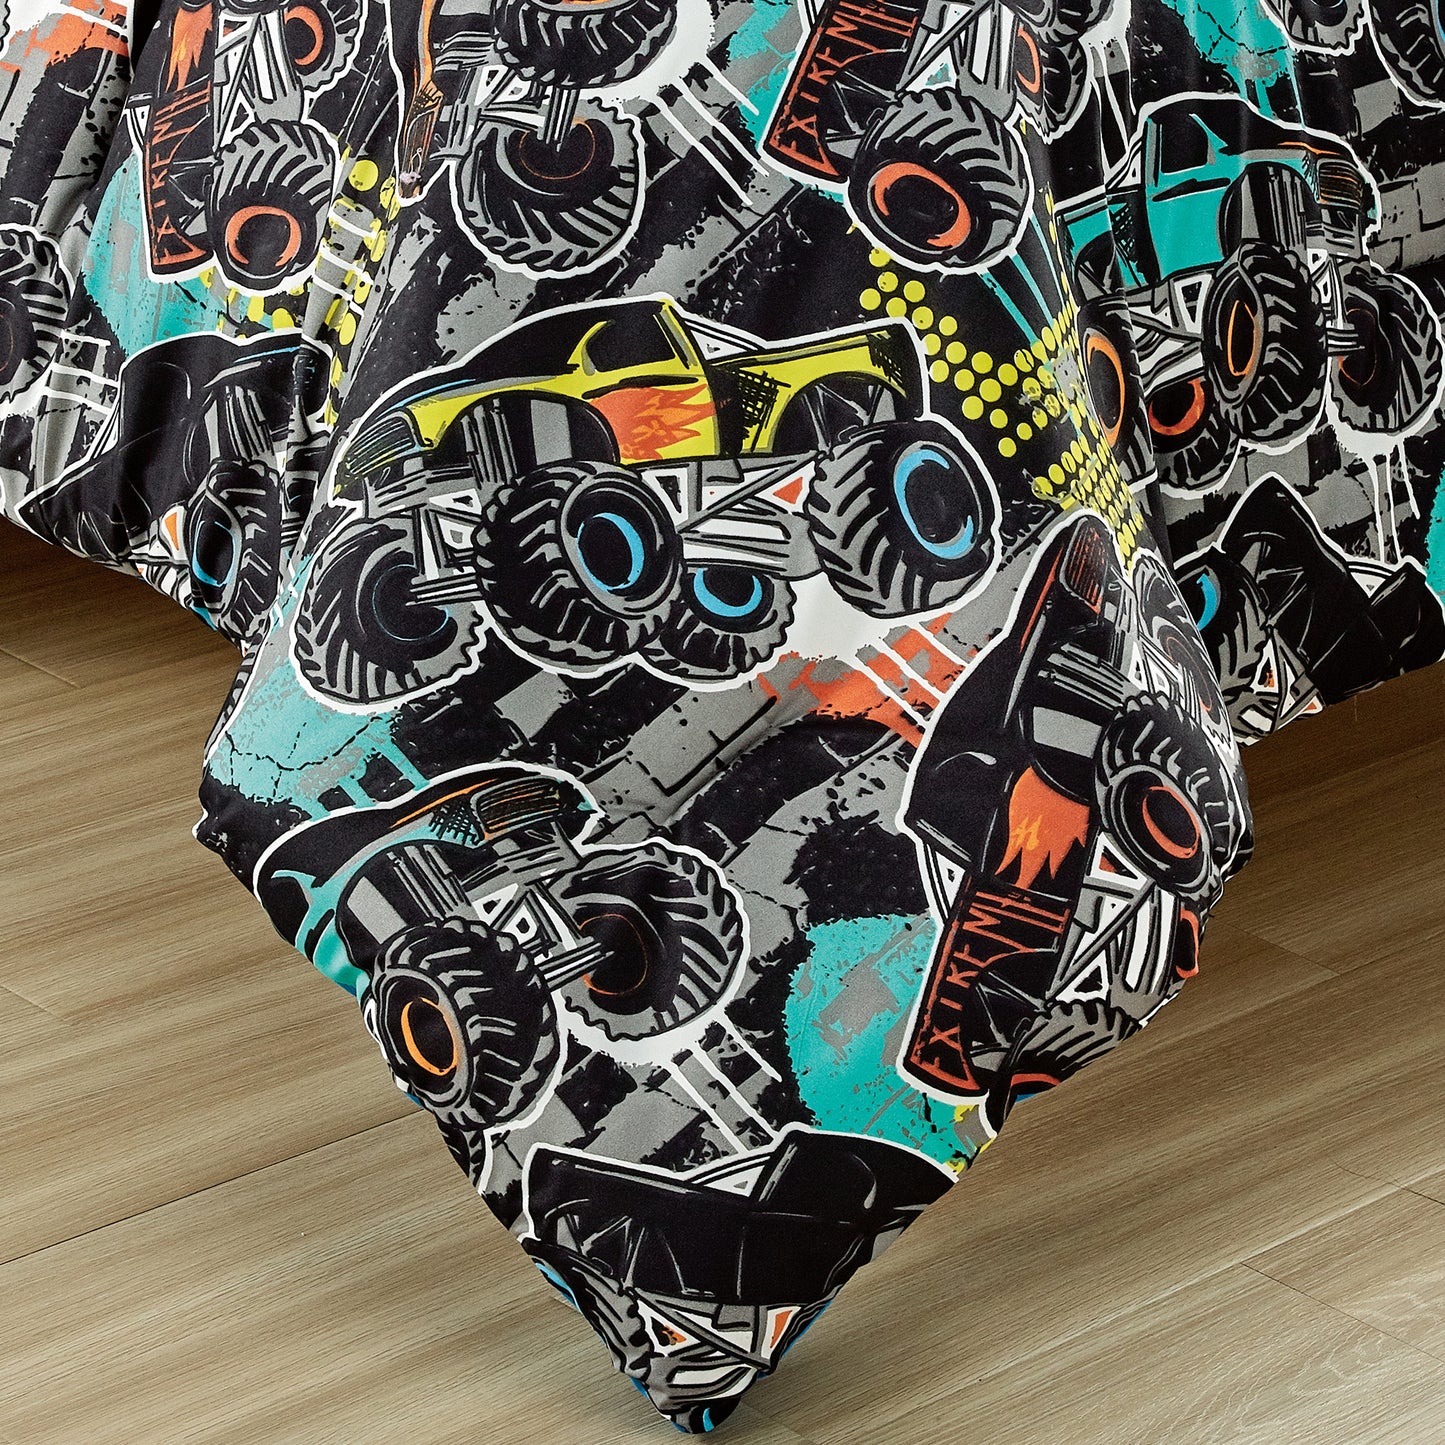 Monster Truck Racing Kids Microfiber Printed Comforter Set with Plush Pillow